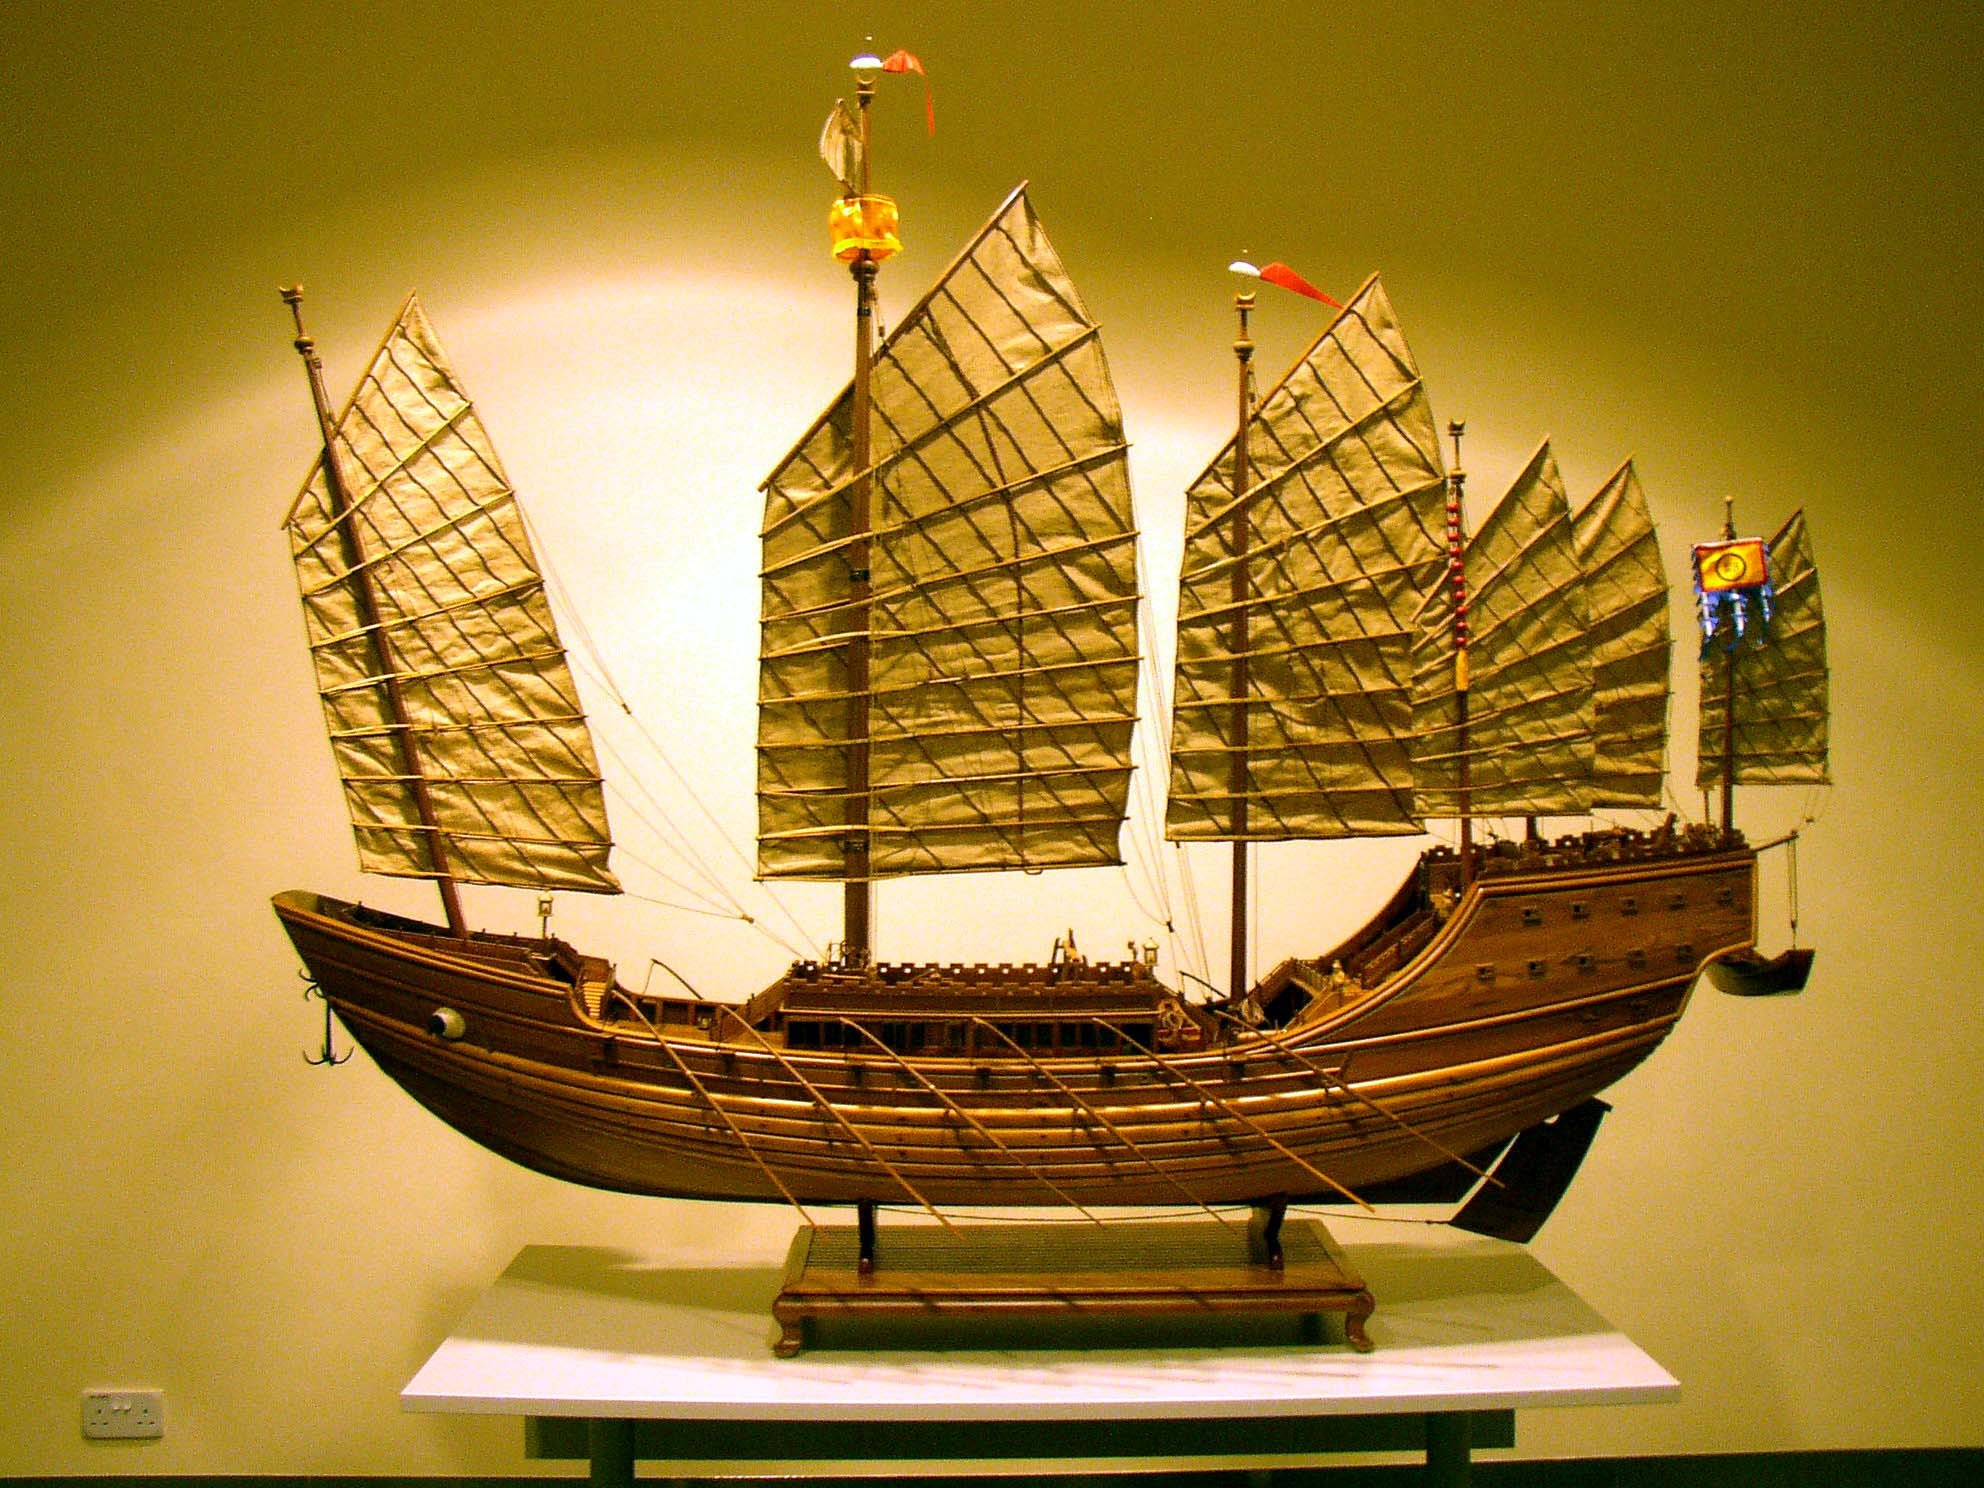 Китайская лодка 6 букв. Барка Джонка рикша пакетбот. Чжэн Хэ корабль. Джонка Чжэн Хэ. Китайский флот Чжэн Хэ.